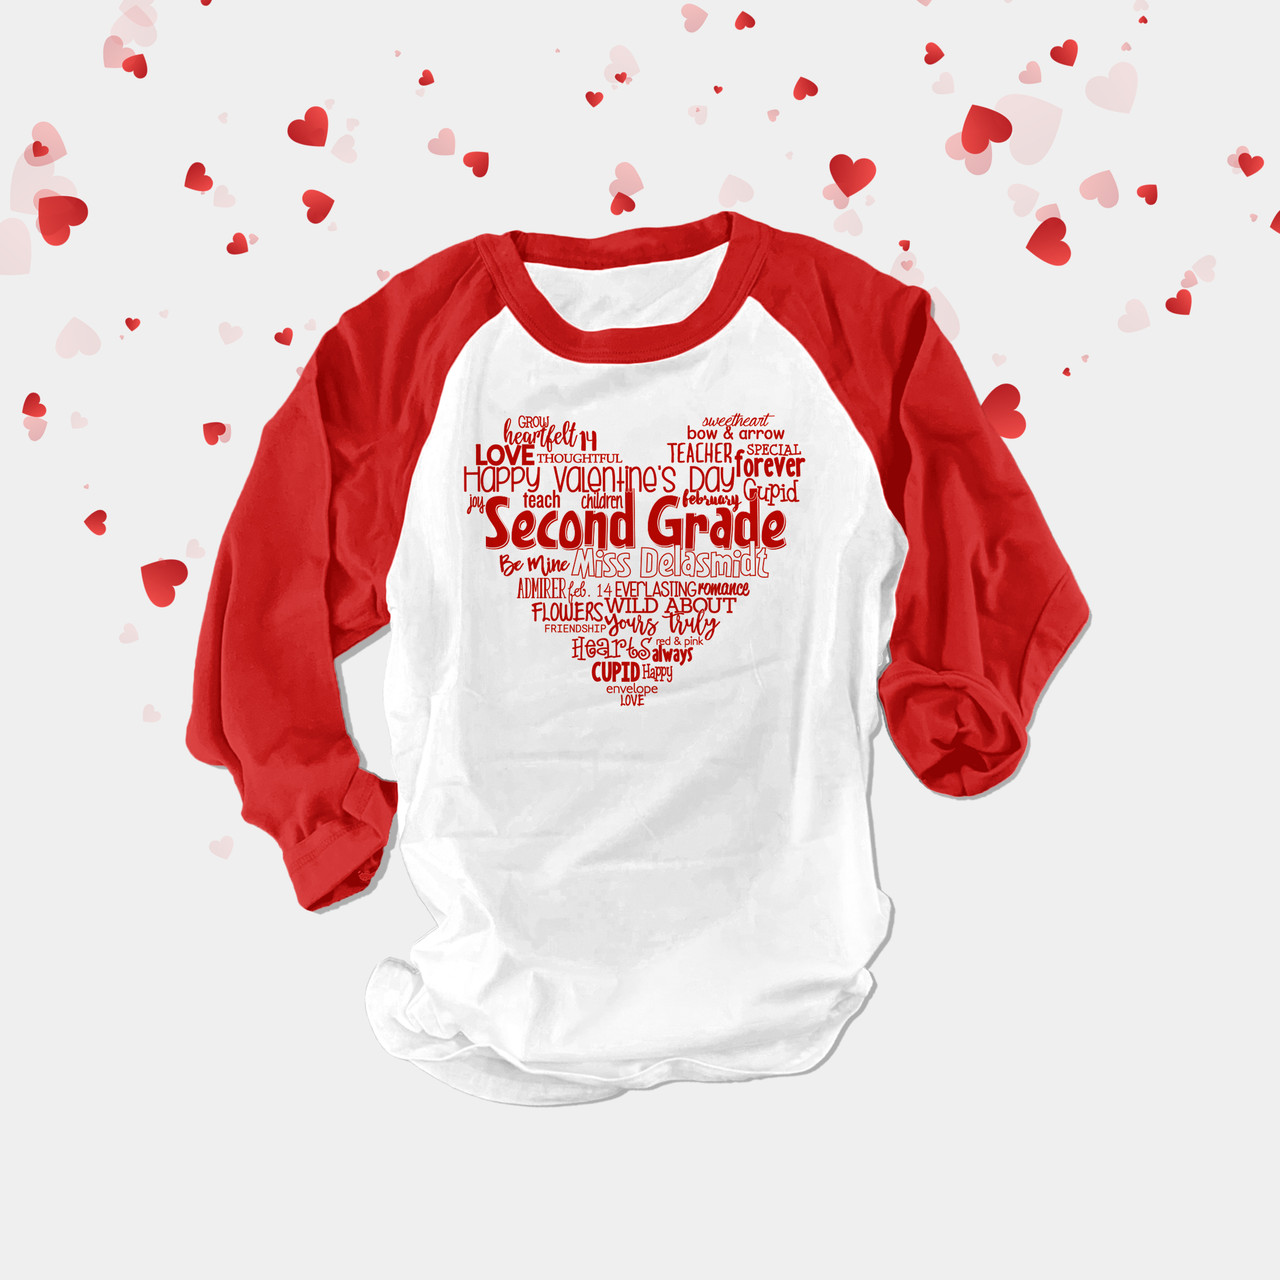 Floral Love Heart Shirt Valentine's Day Love TShirt Love Heart Arrow Shirt Heart Tee Gifts for Moms